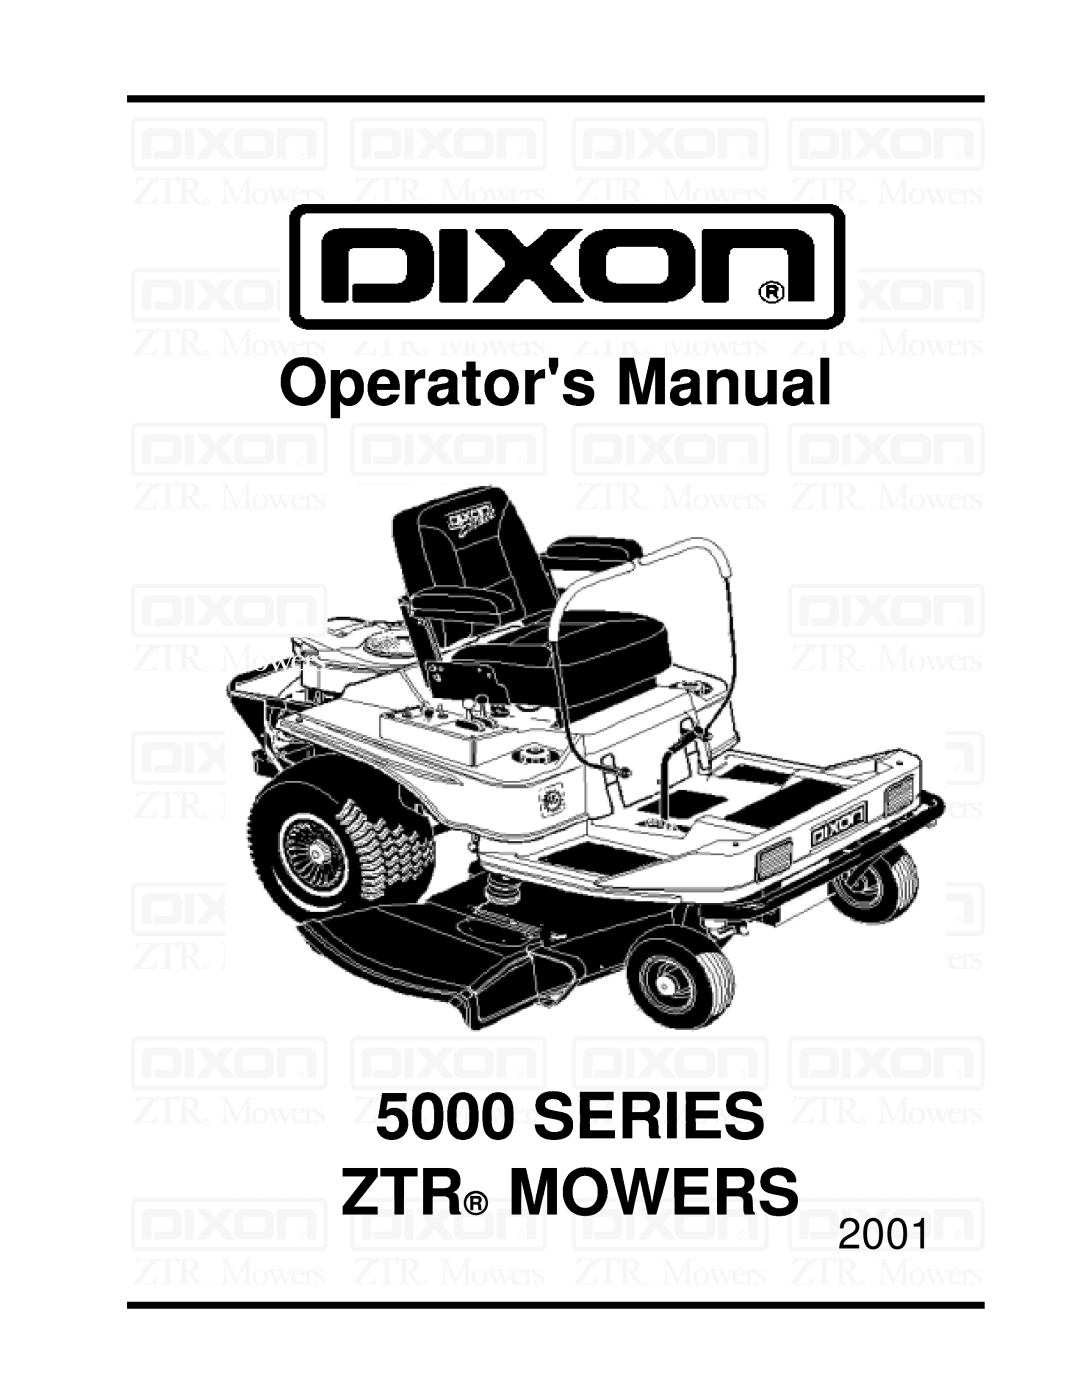 Dixon ZTR 5017Twin manual Operators Manual, Ztr Mowers, 5000SERIES, 2001, Page 